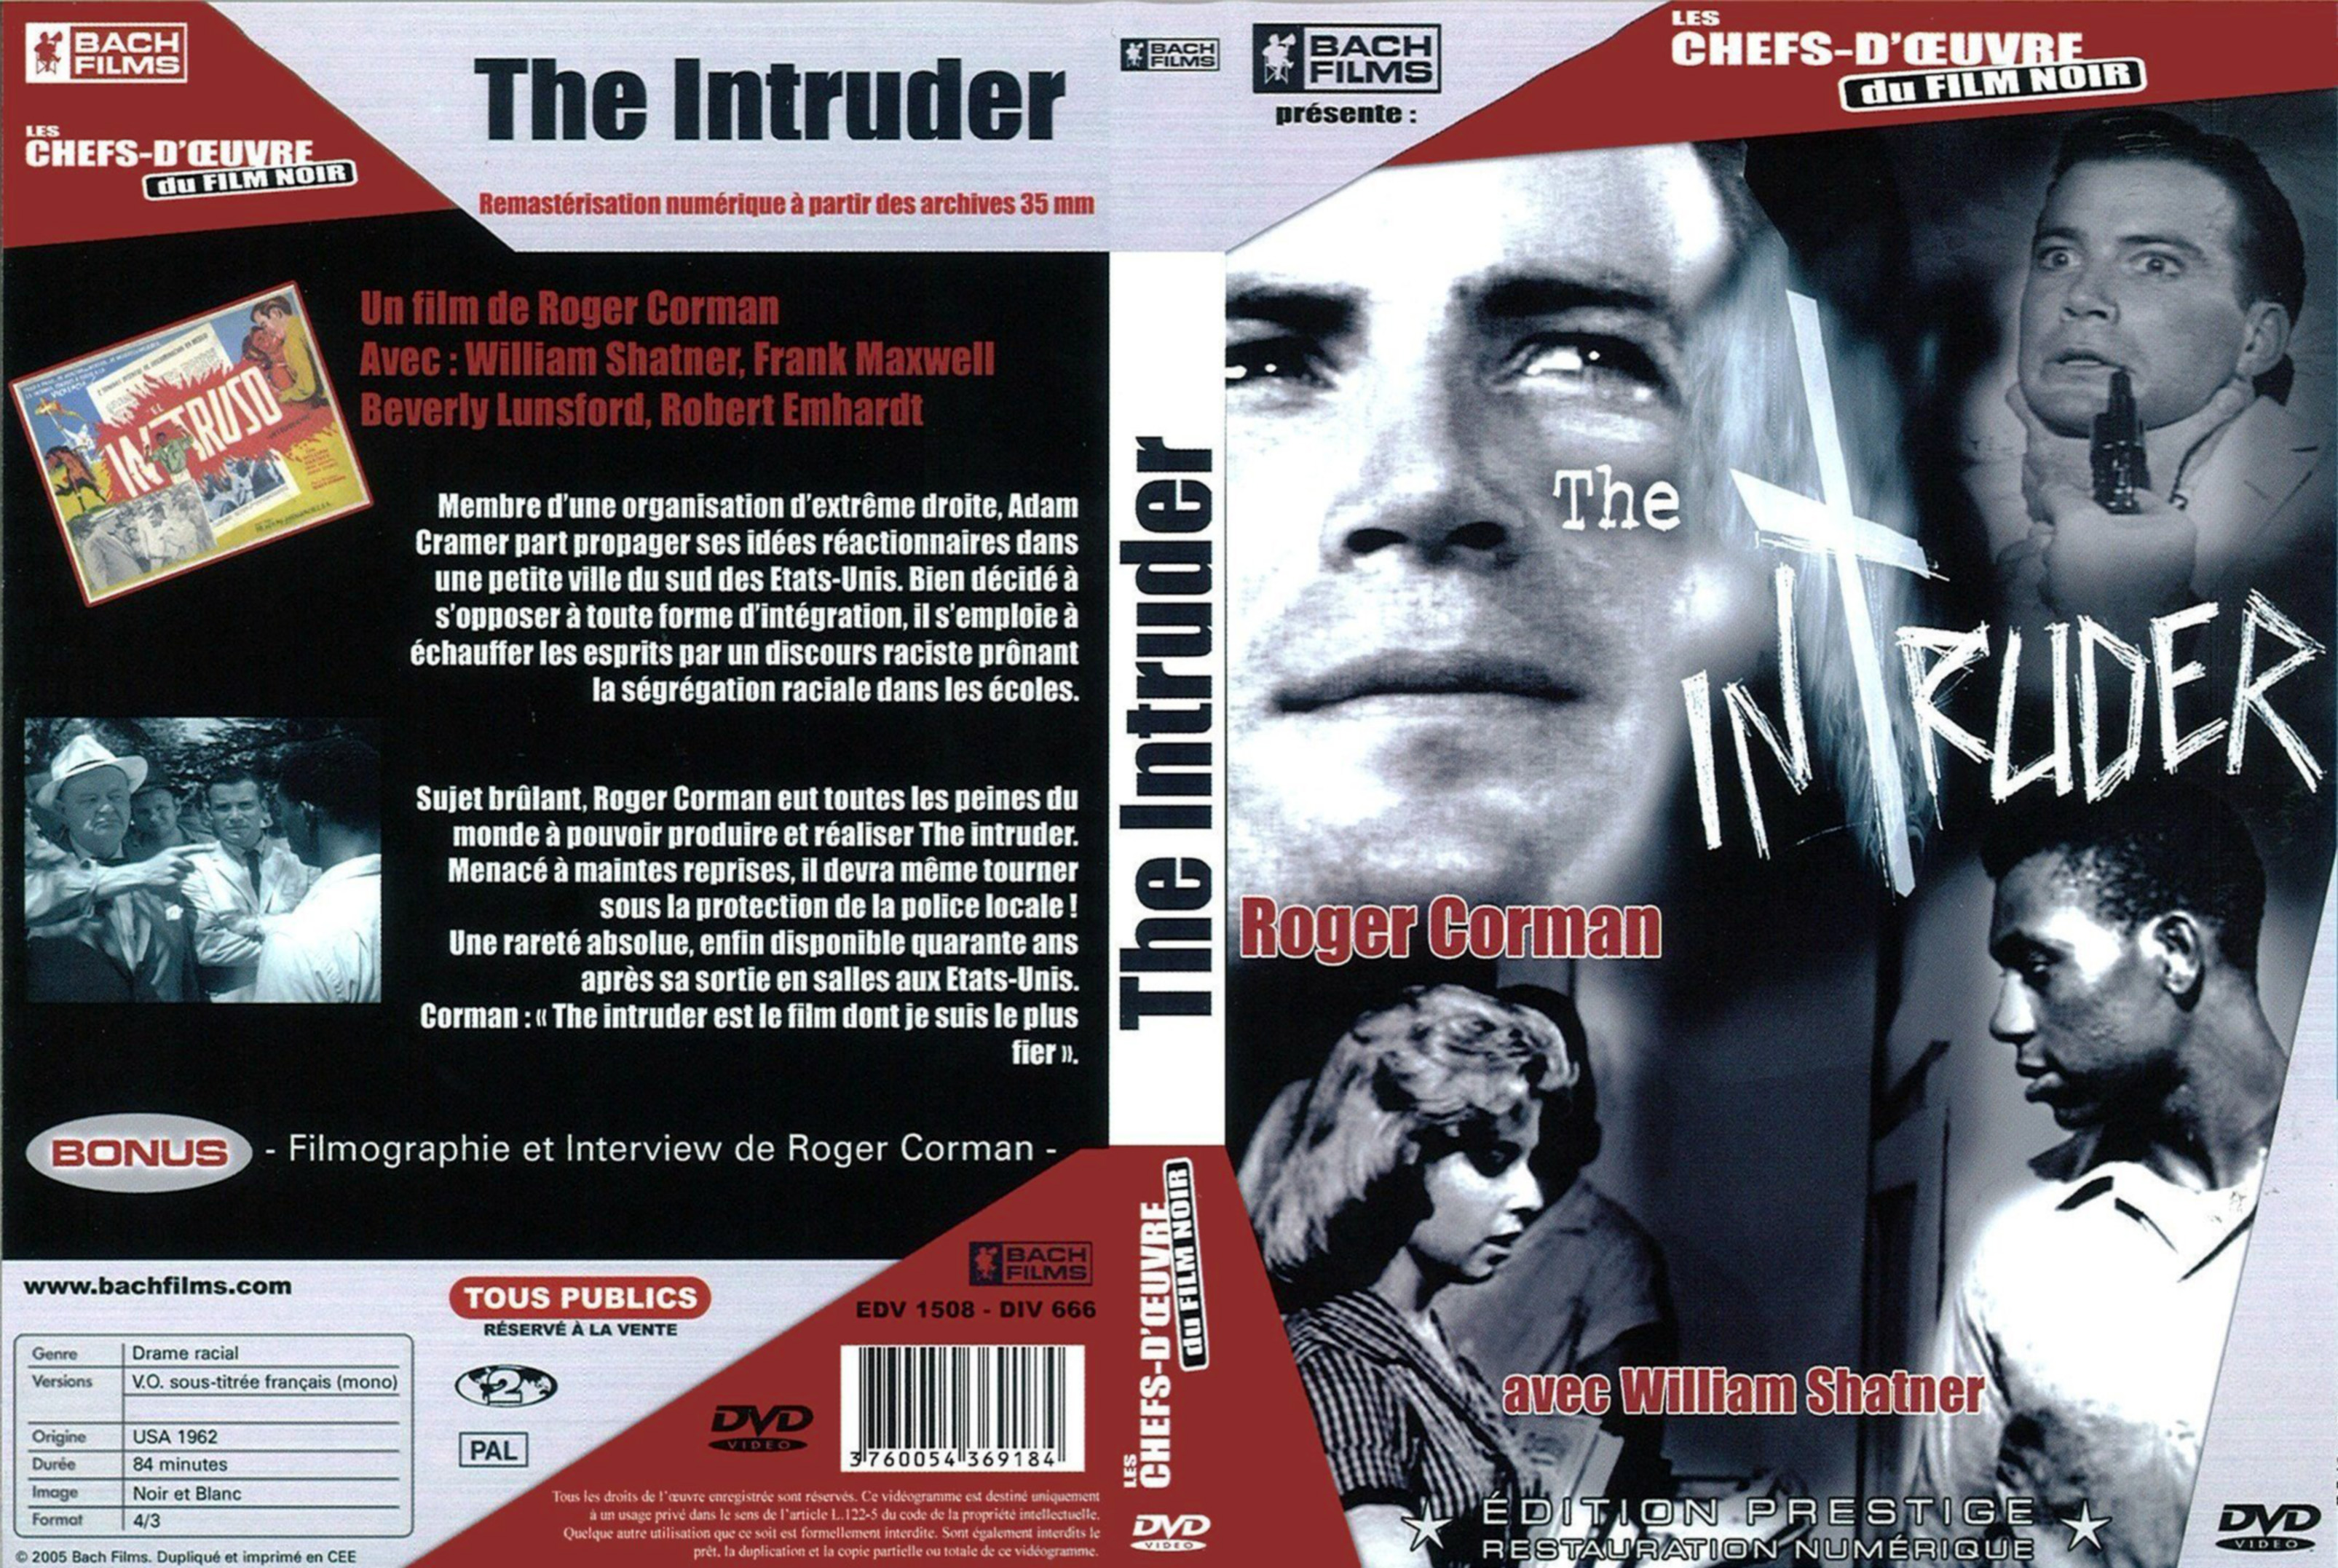 Jaquette DVD The intruder